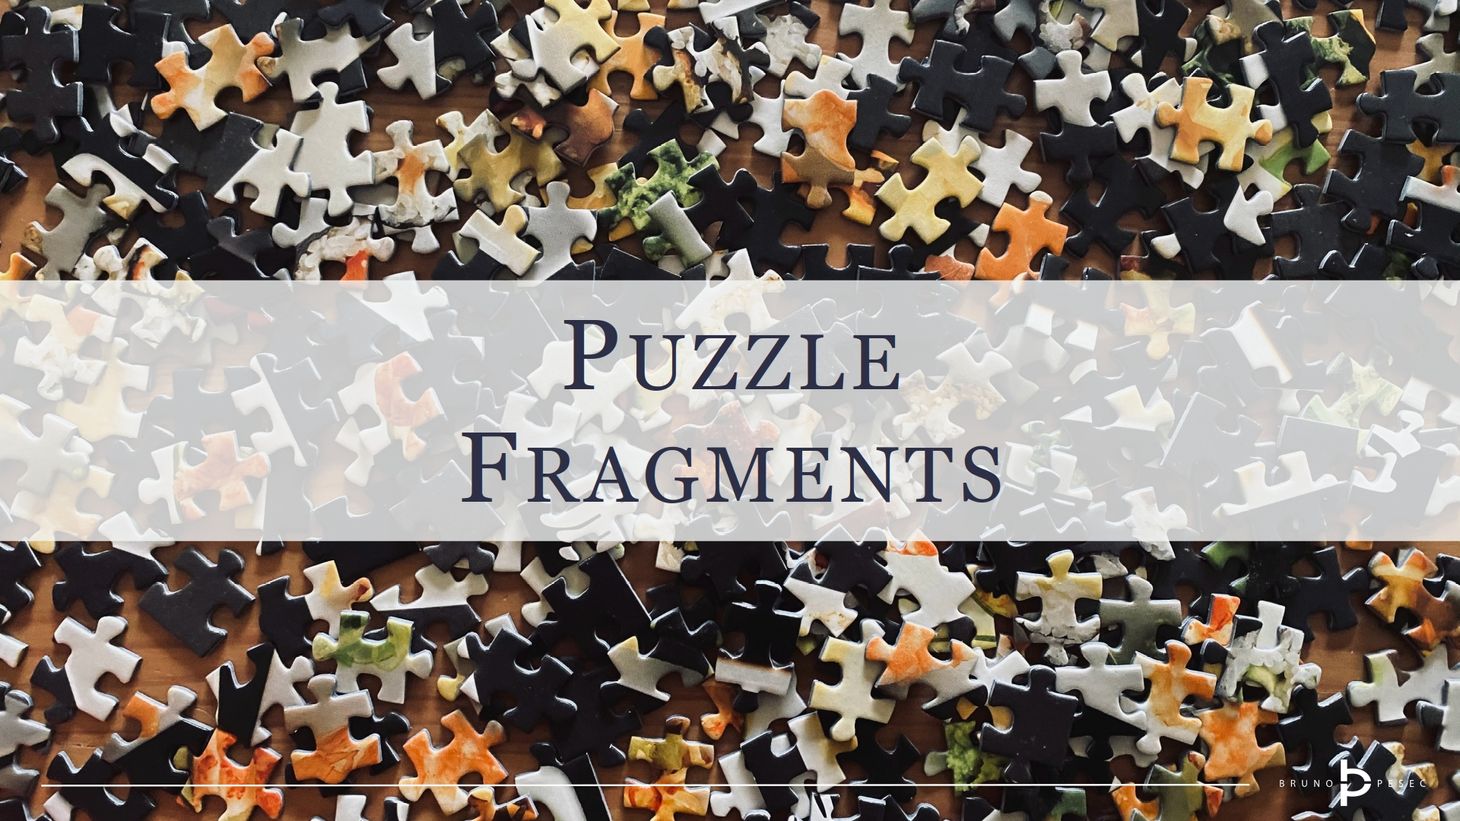 Puzzle fragments